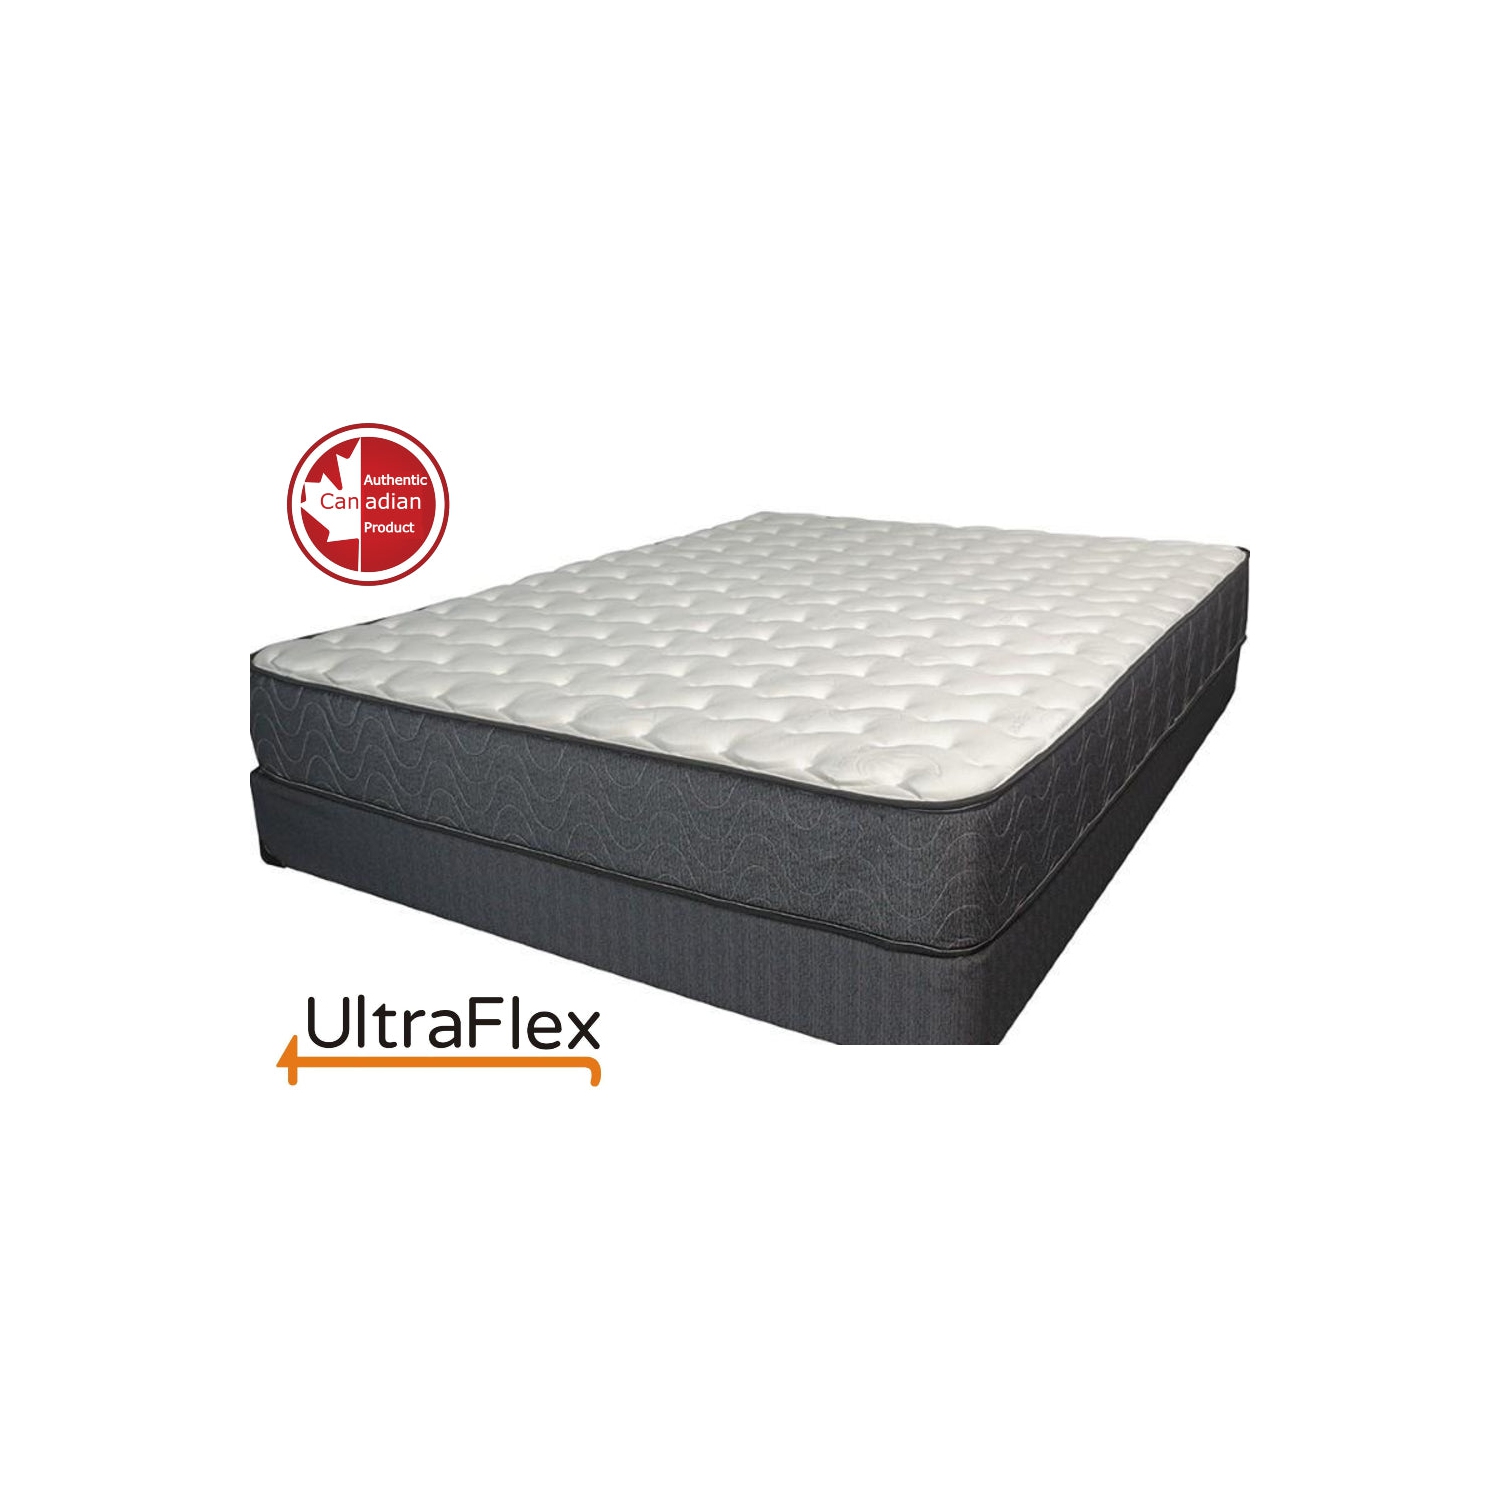 Ultraflex CLASSIC- Orthopedic Luxury Gel Memory Foam, Eco-friendly Mattress (Made in Canada)- King Size